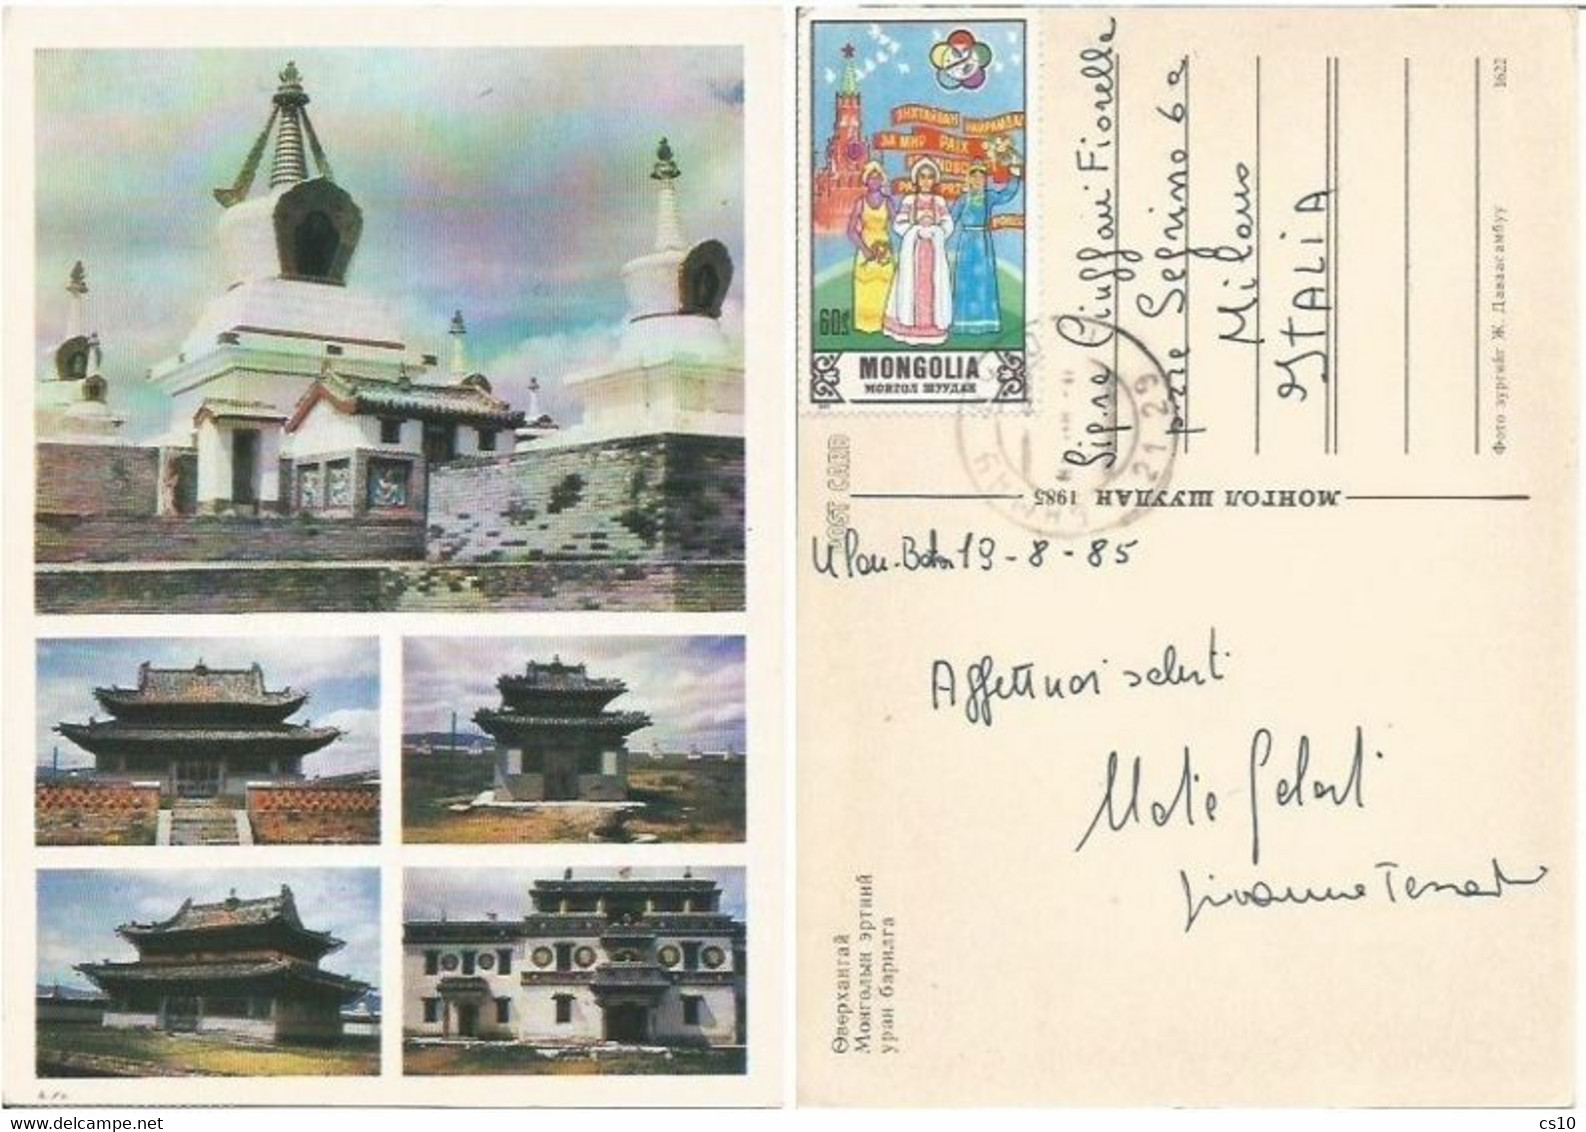 Mongolia Pagodas Of Monastery In Ulan Baatar Pcard 19aug1985 With 1 Stamp - Mongolia